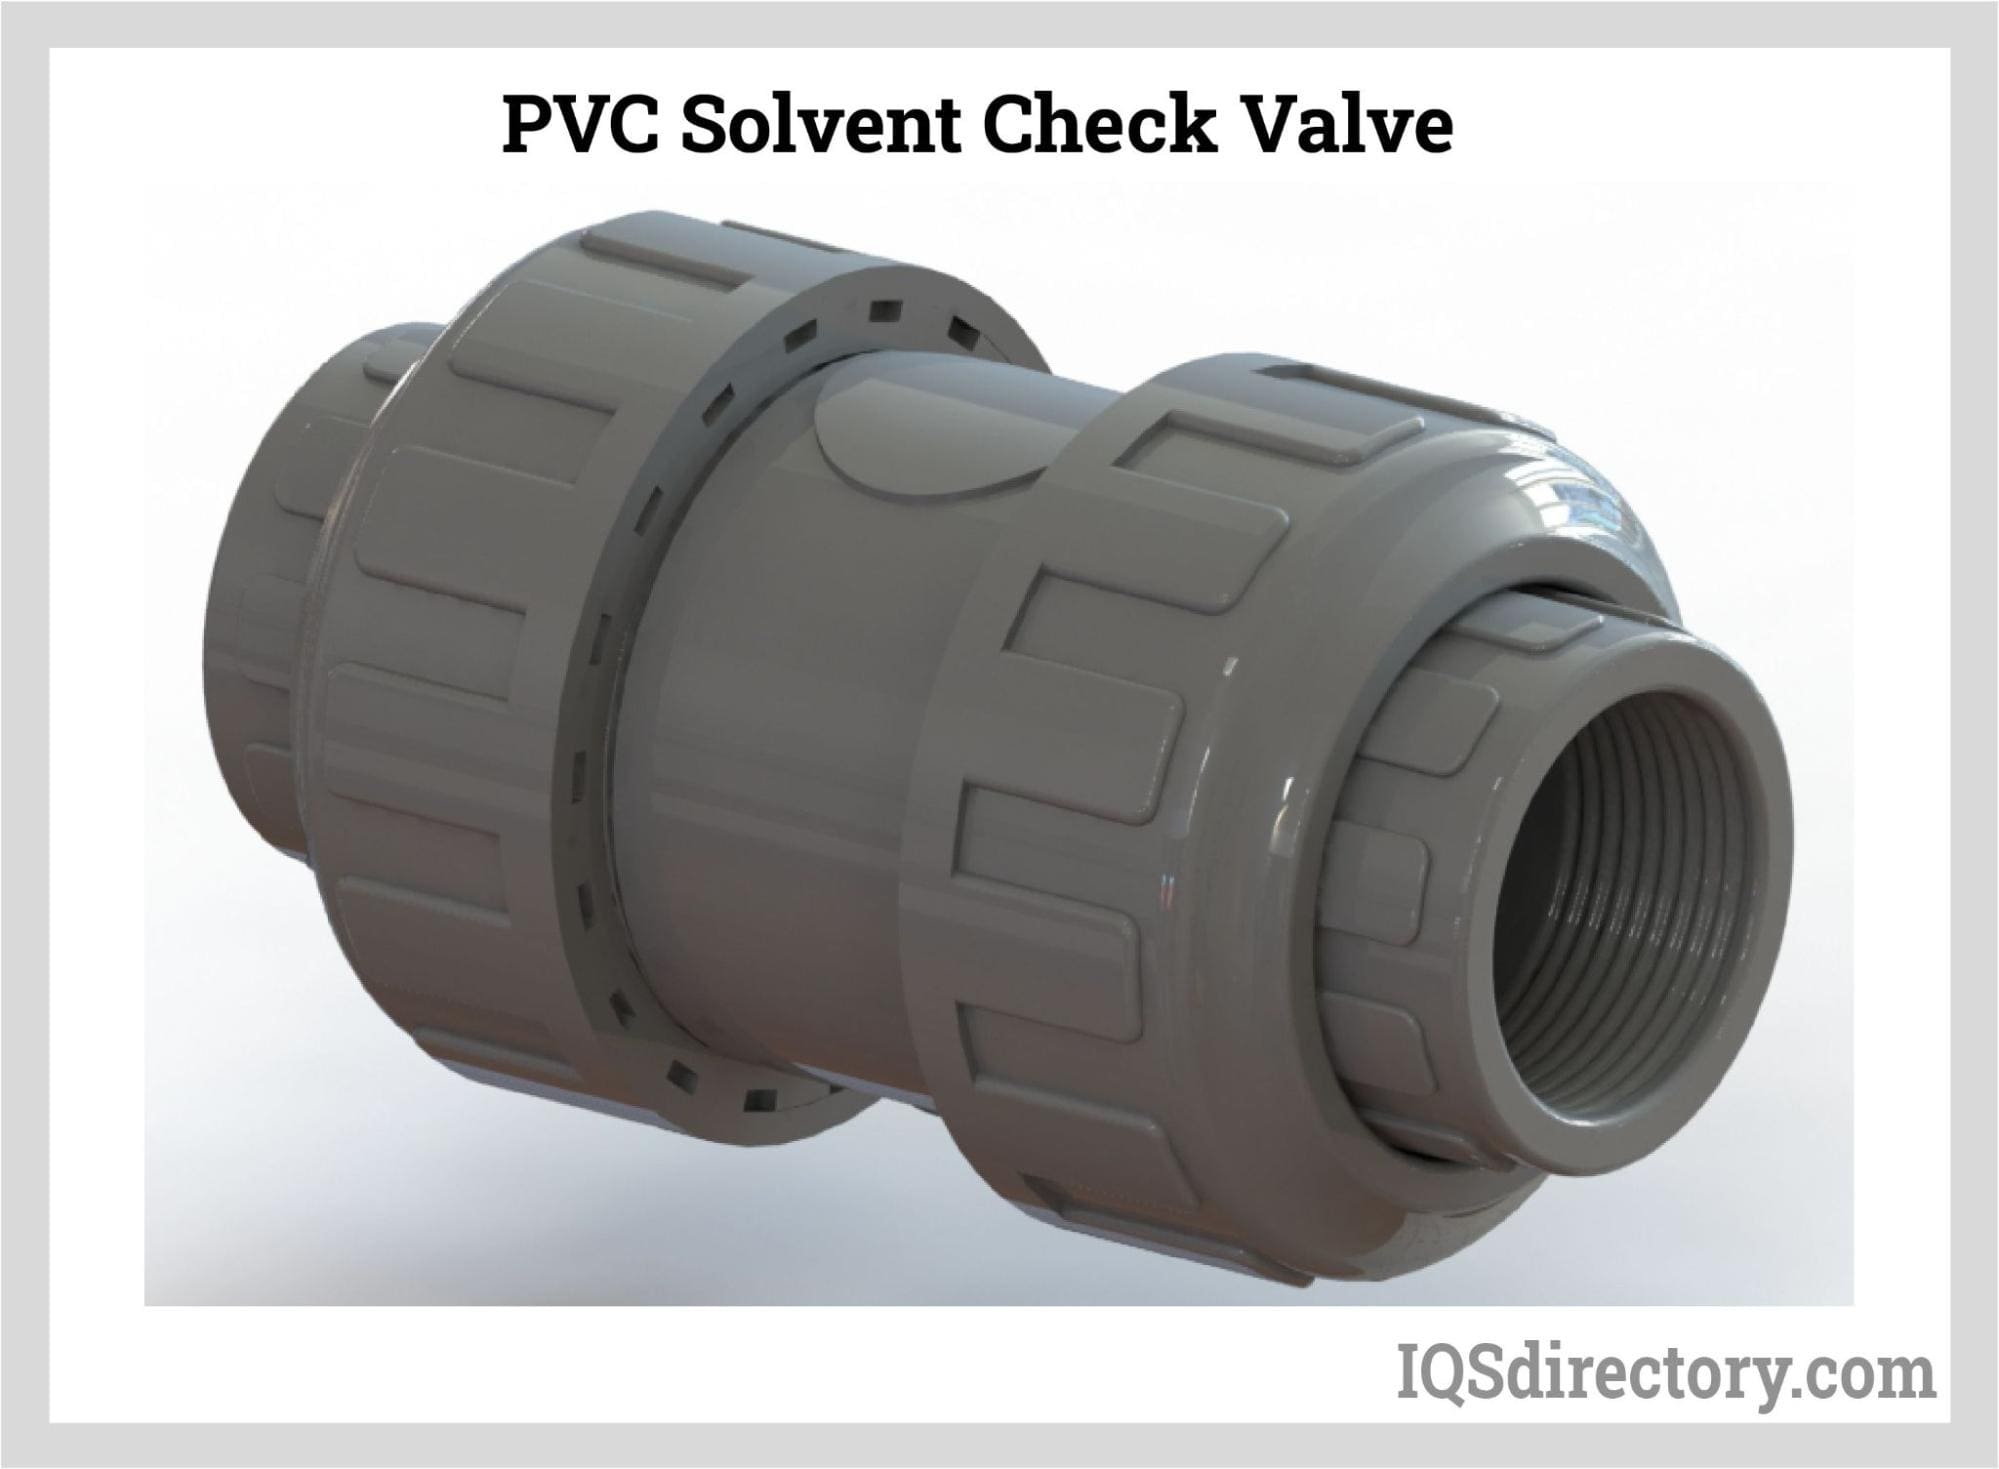 PVC Solvent Check Valve